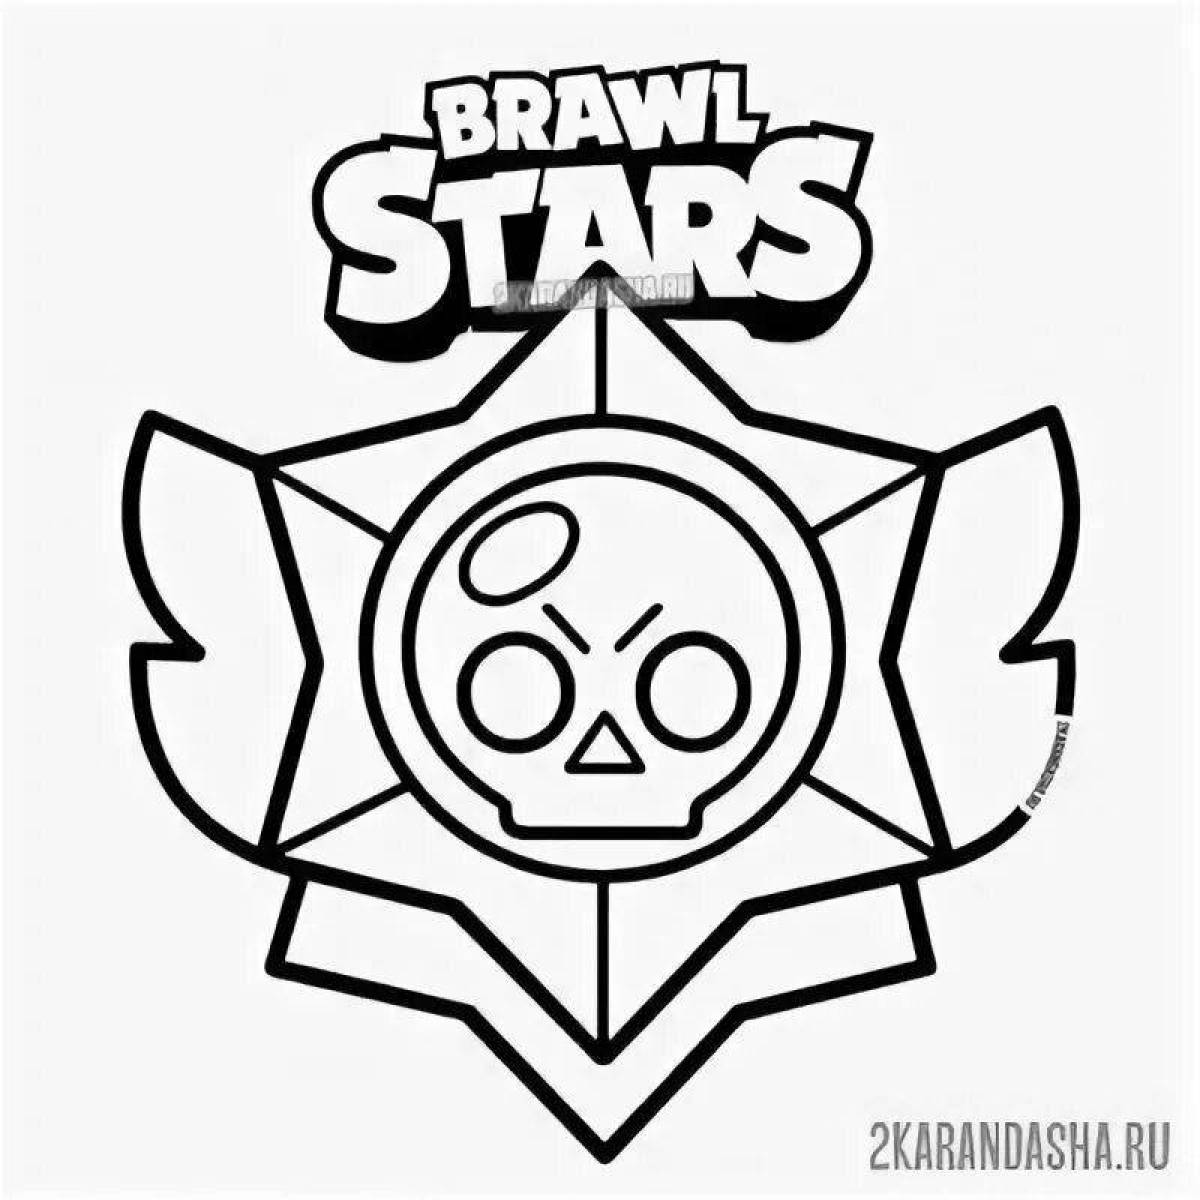 Bravo stars logo #10